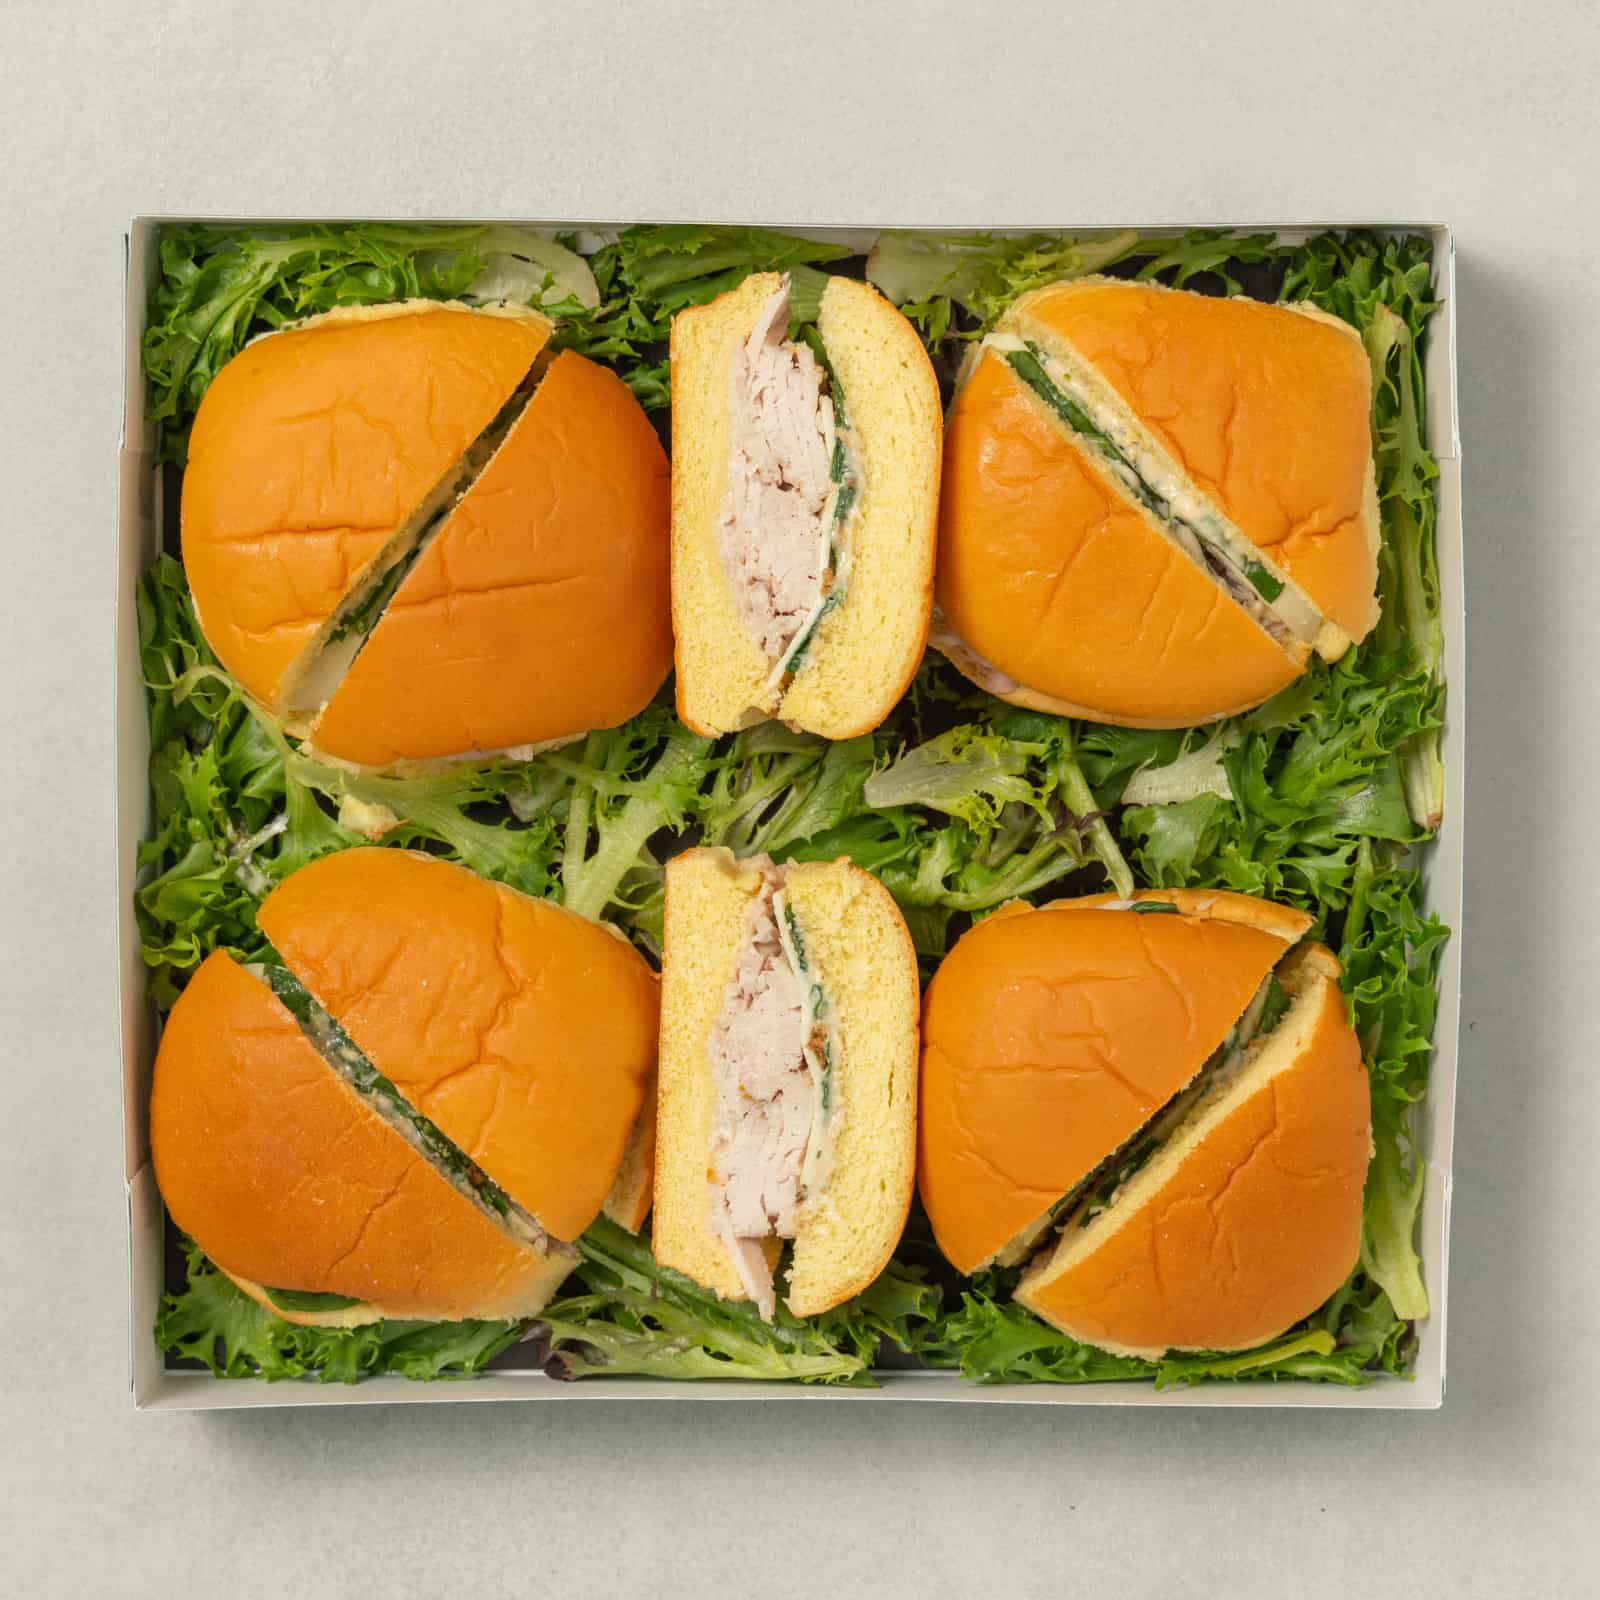 Smoked Turkey Gourmet sandwich platter AvecPlaisirs